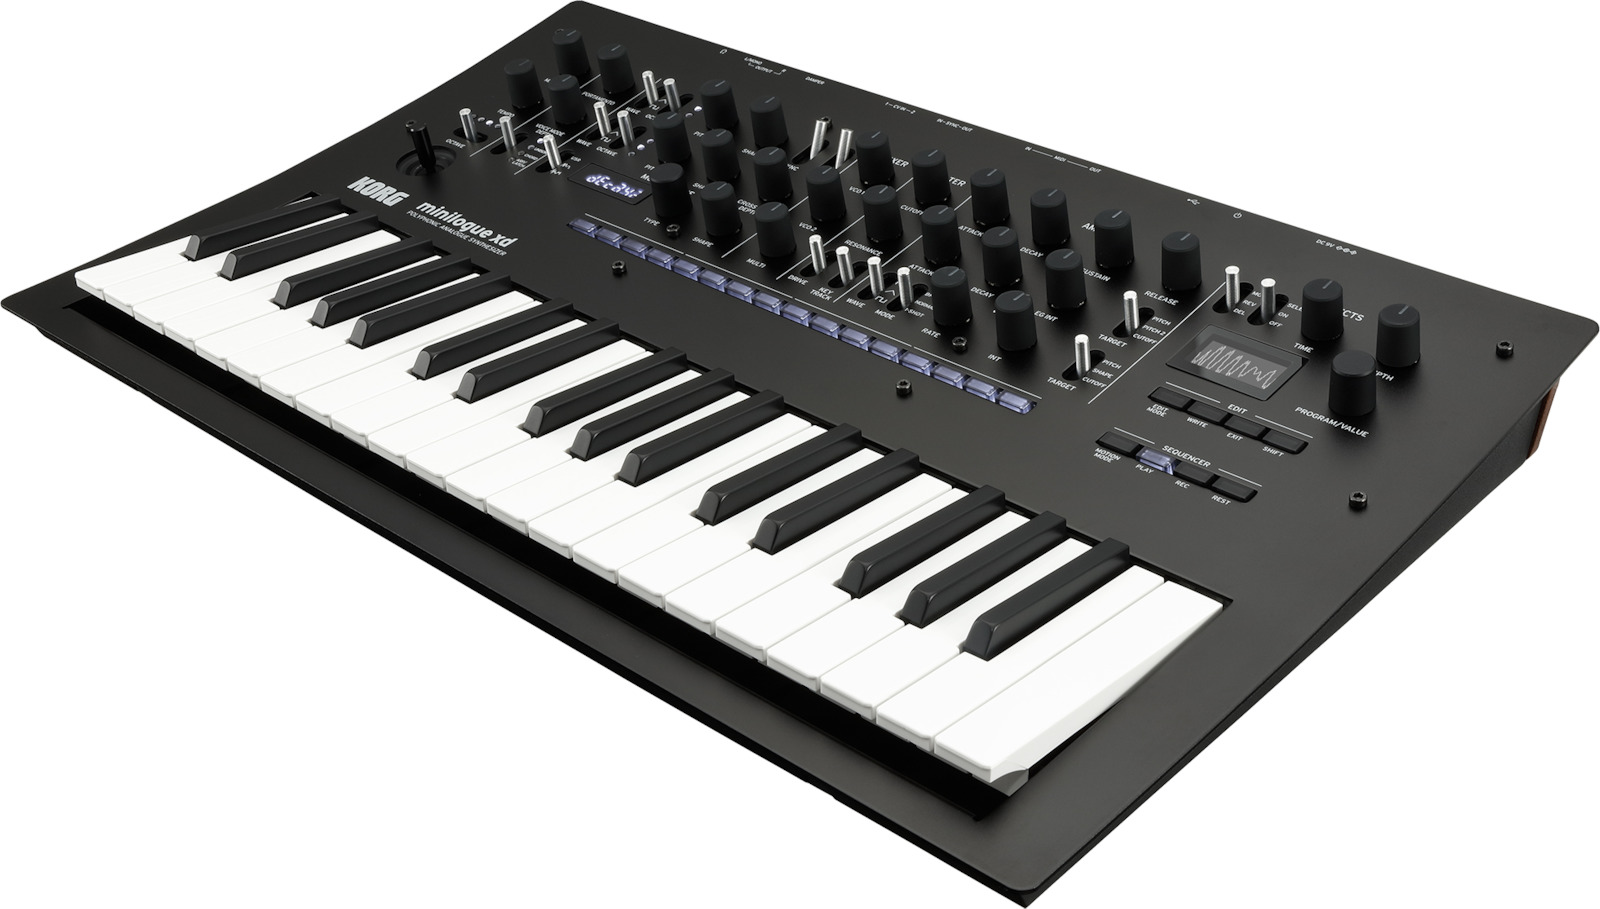 Korg Synthesizer Minilogue XD με 37 Δυναμικά Πλήκτρα Μαύρο